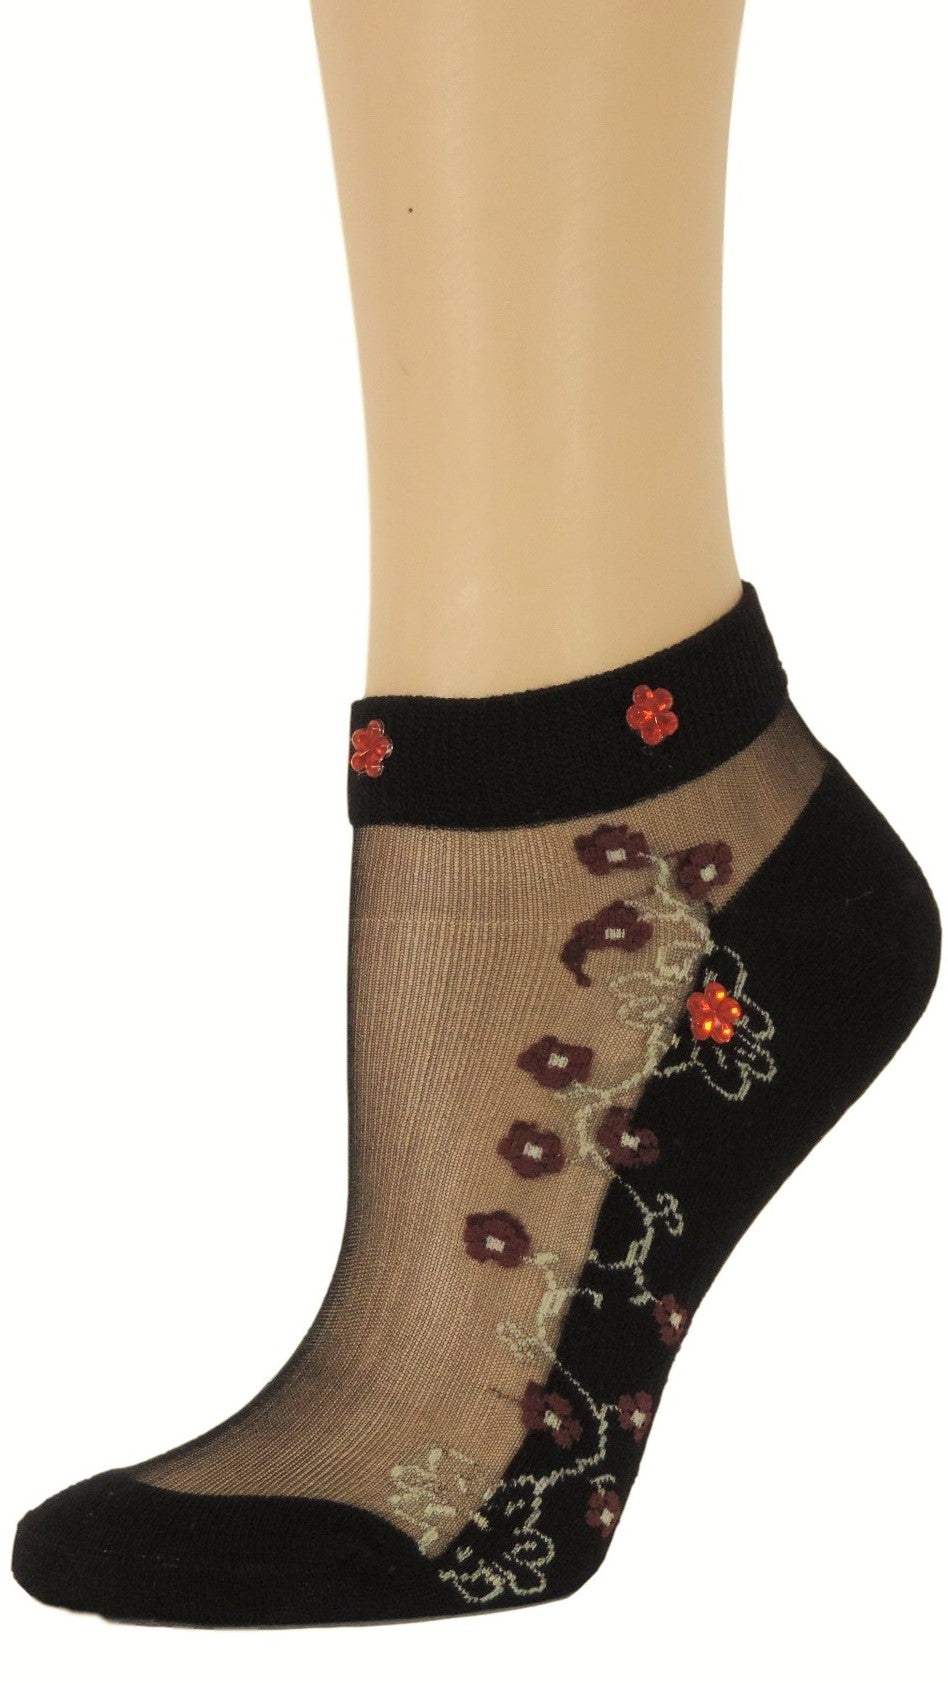 Maroon Flowers Ankle Custom Sheer Socks with beads - Global Trendz Fashion®